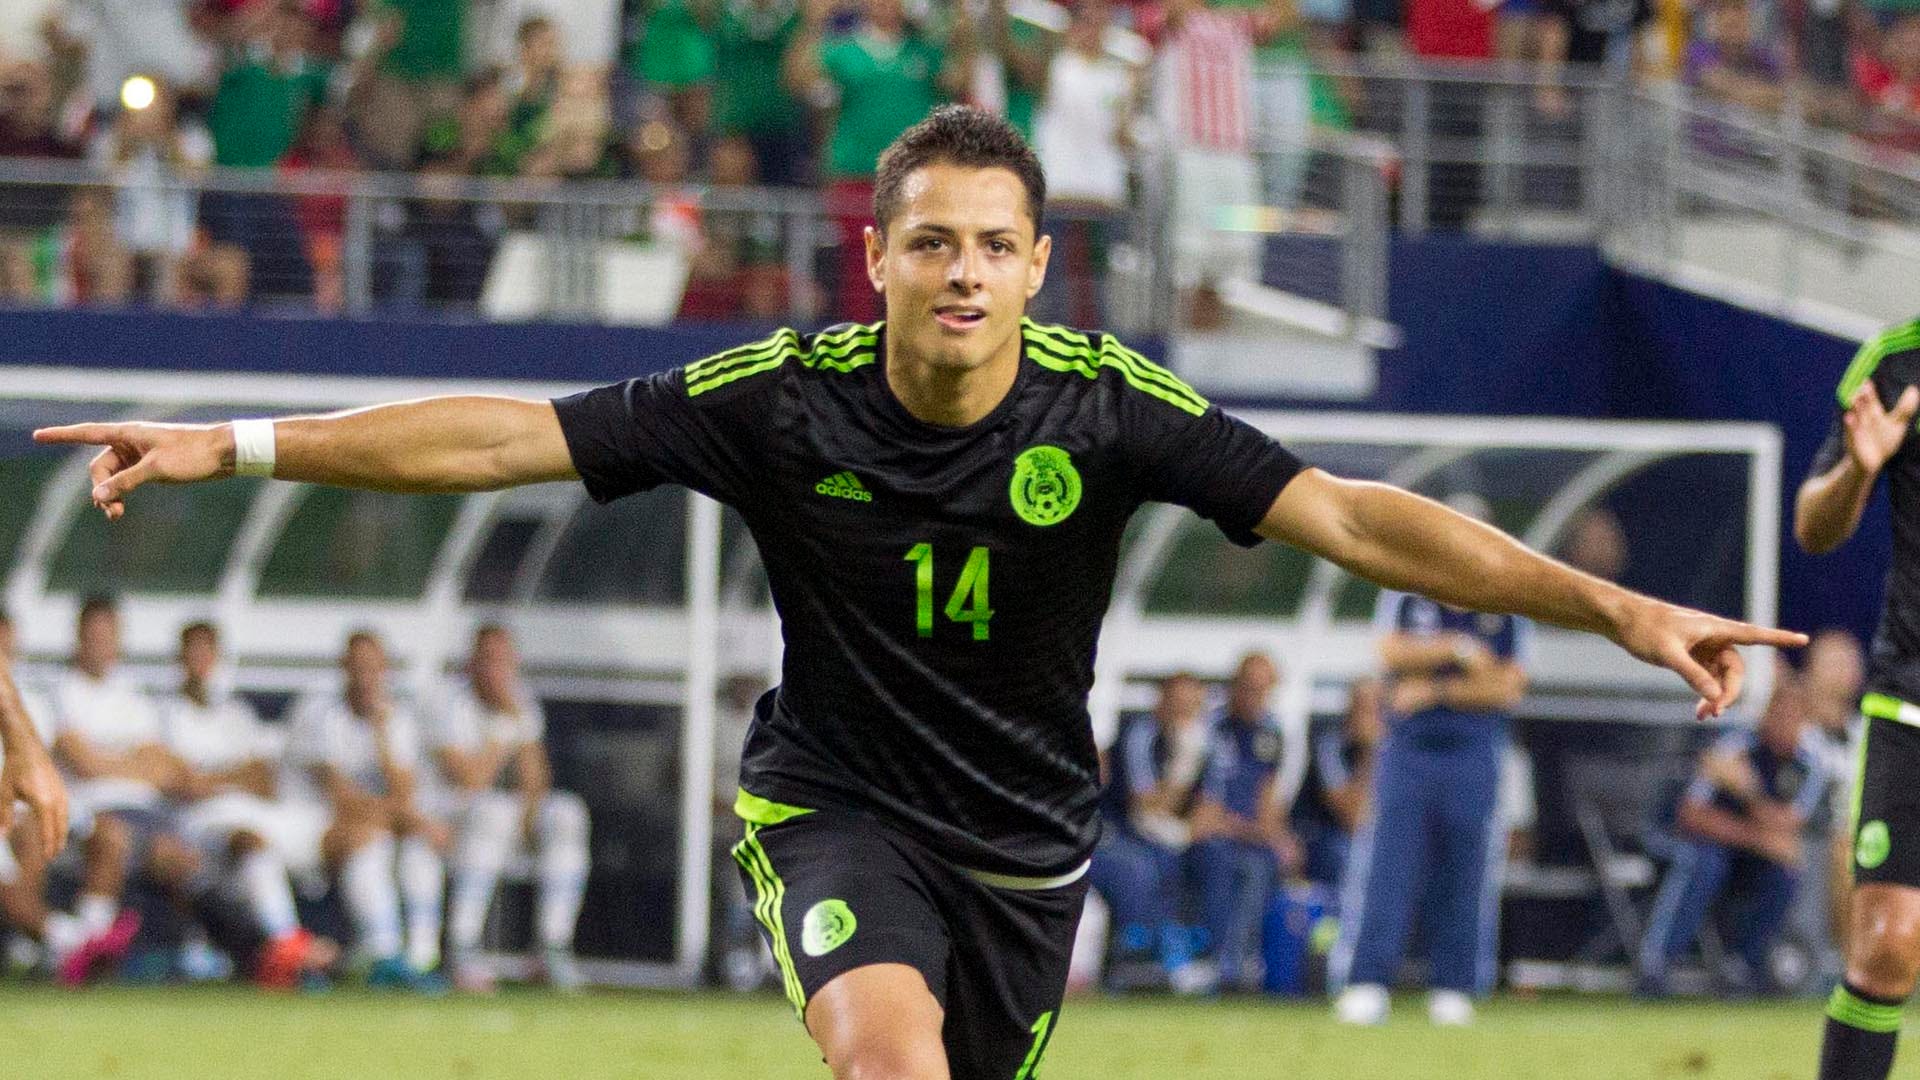 Mexico's top goal scorers' jerseys